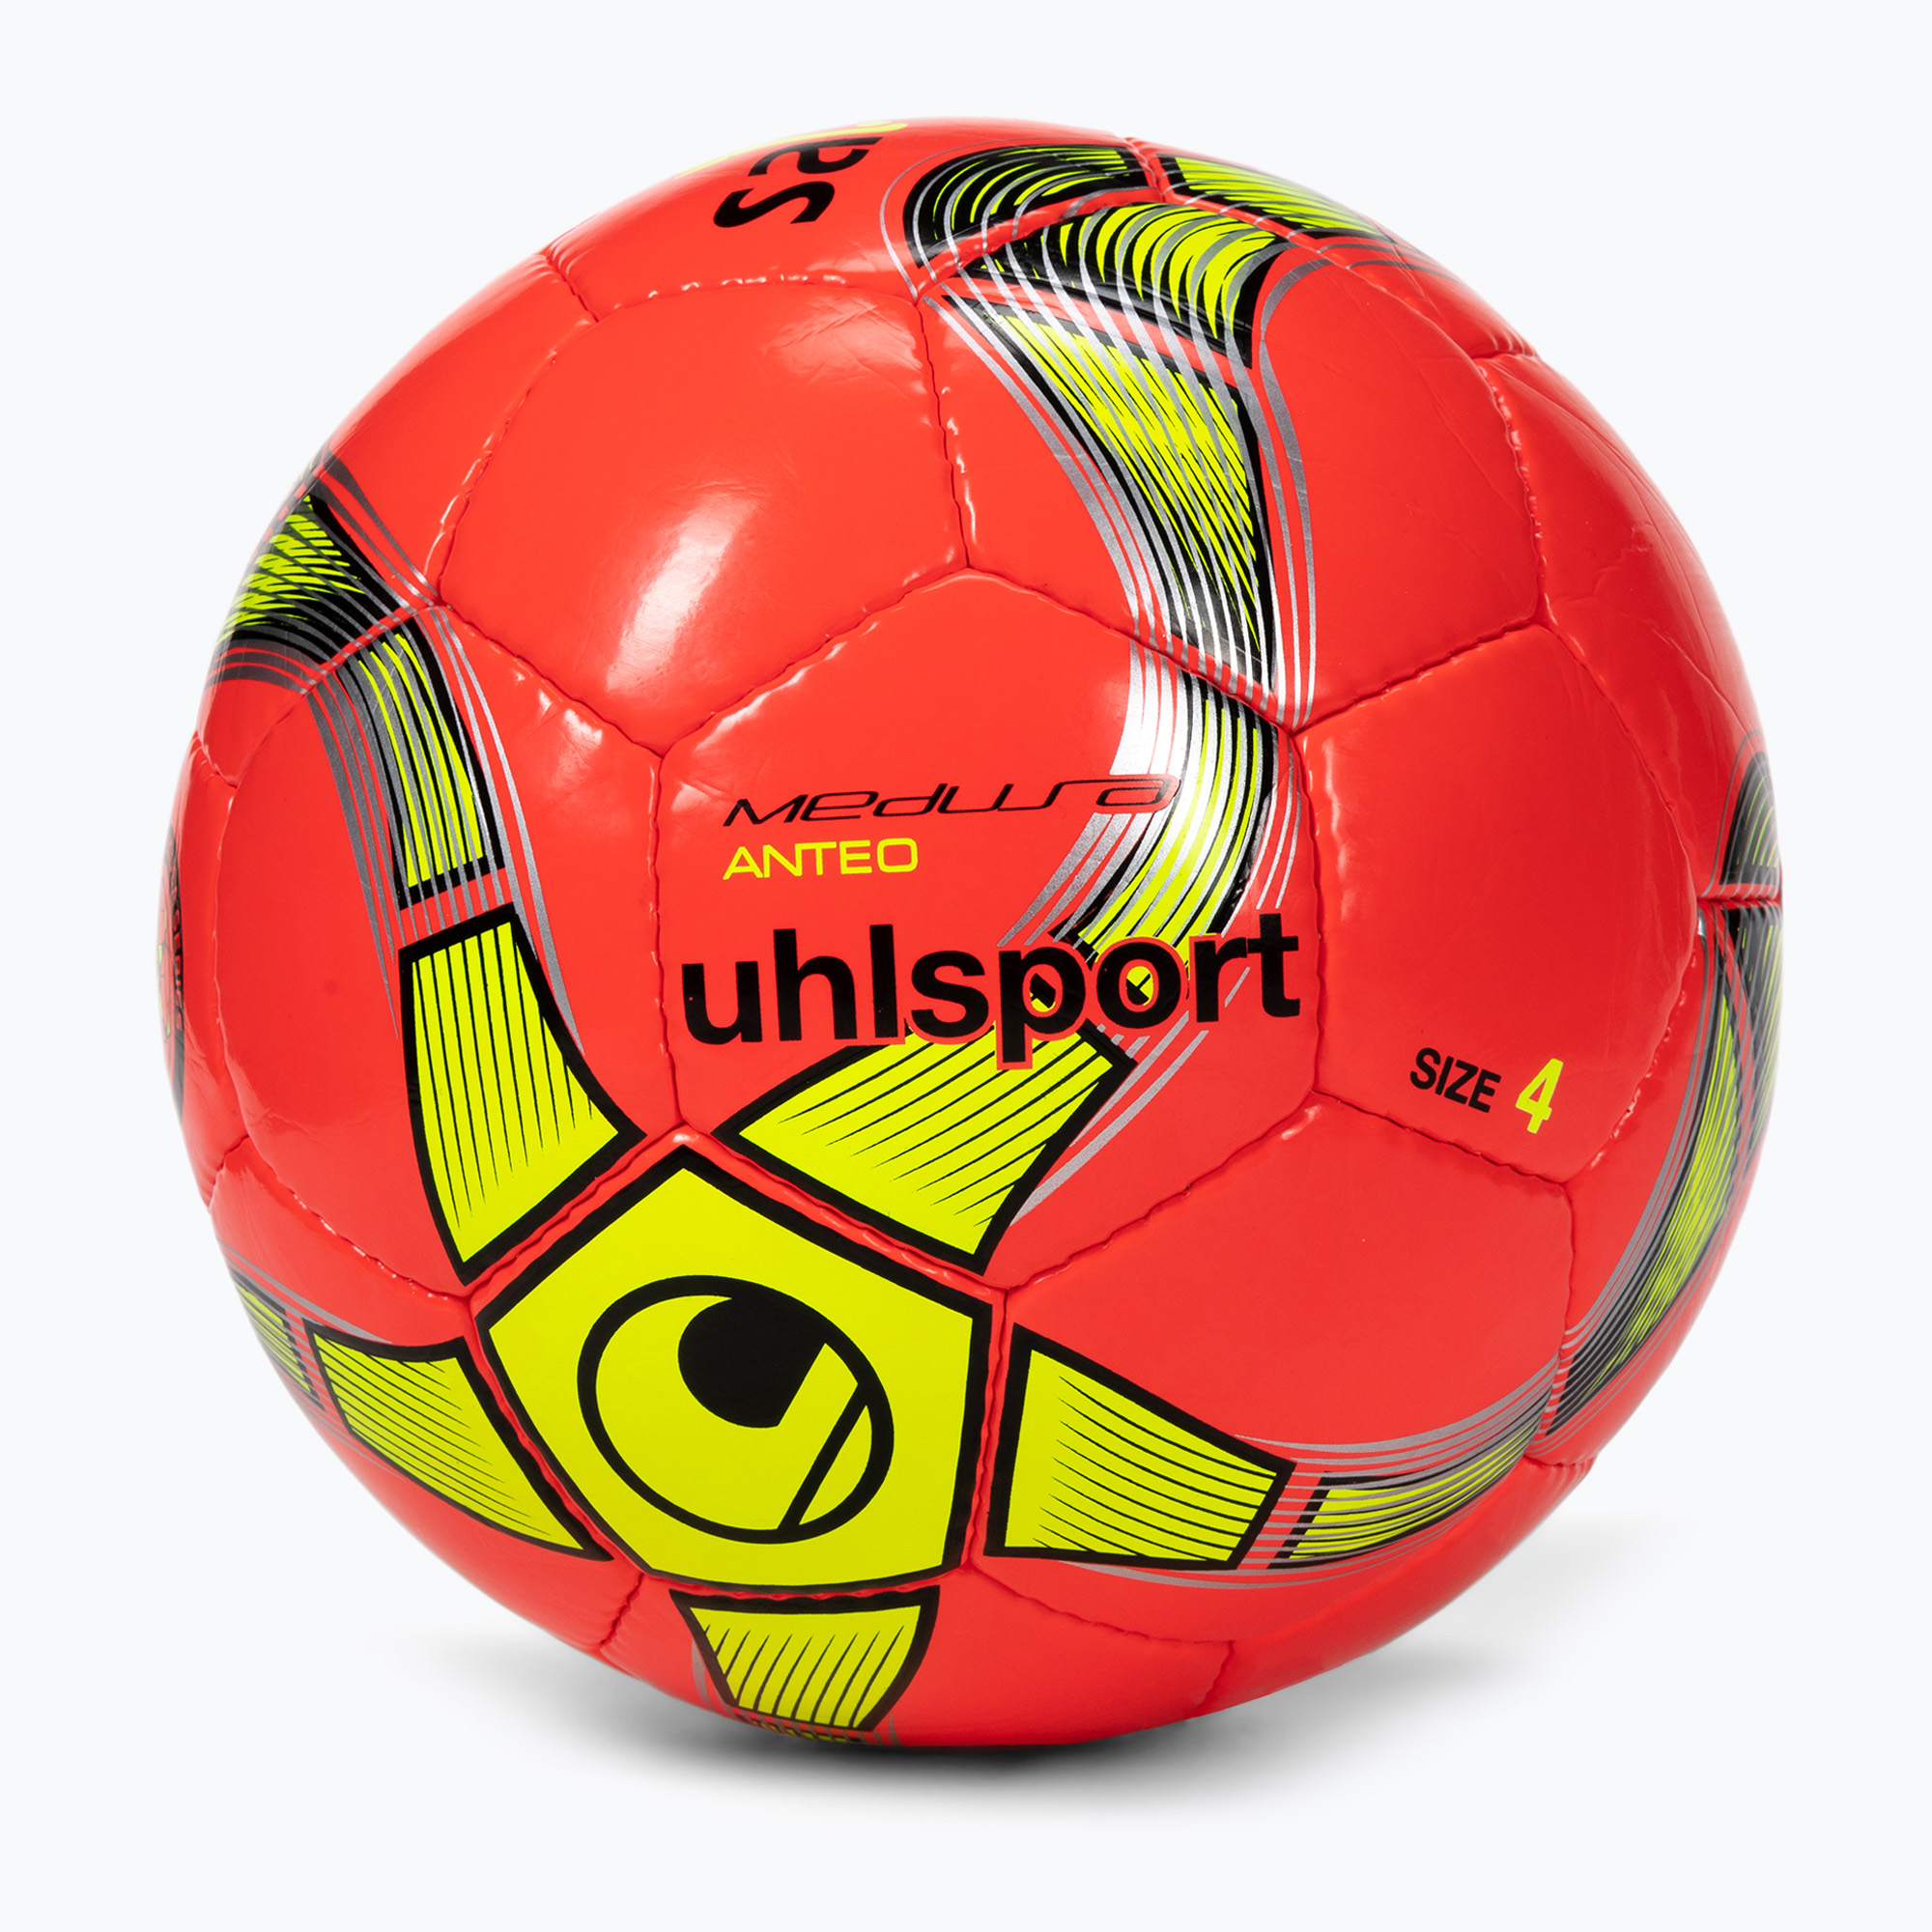 Uhlsport Medusa Anteo futbalová lopta červená 100161402